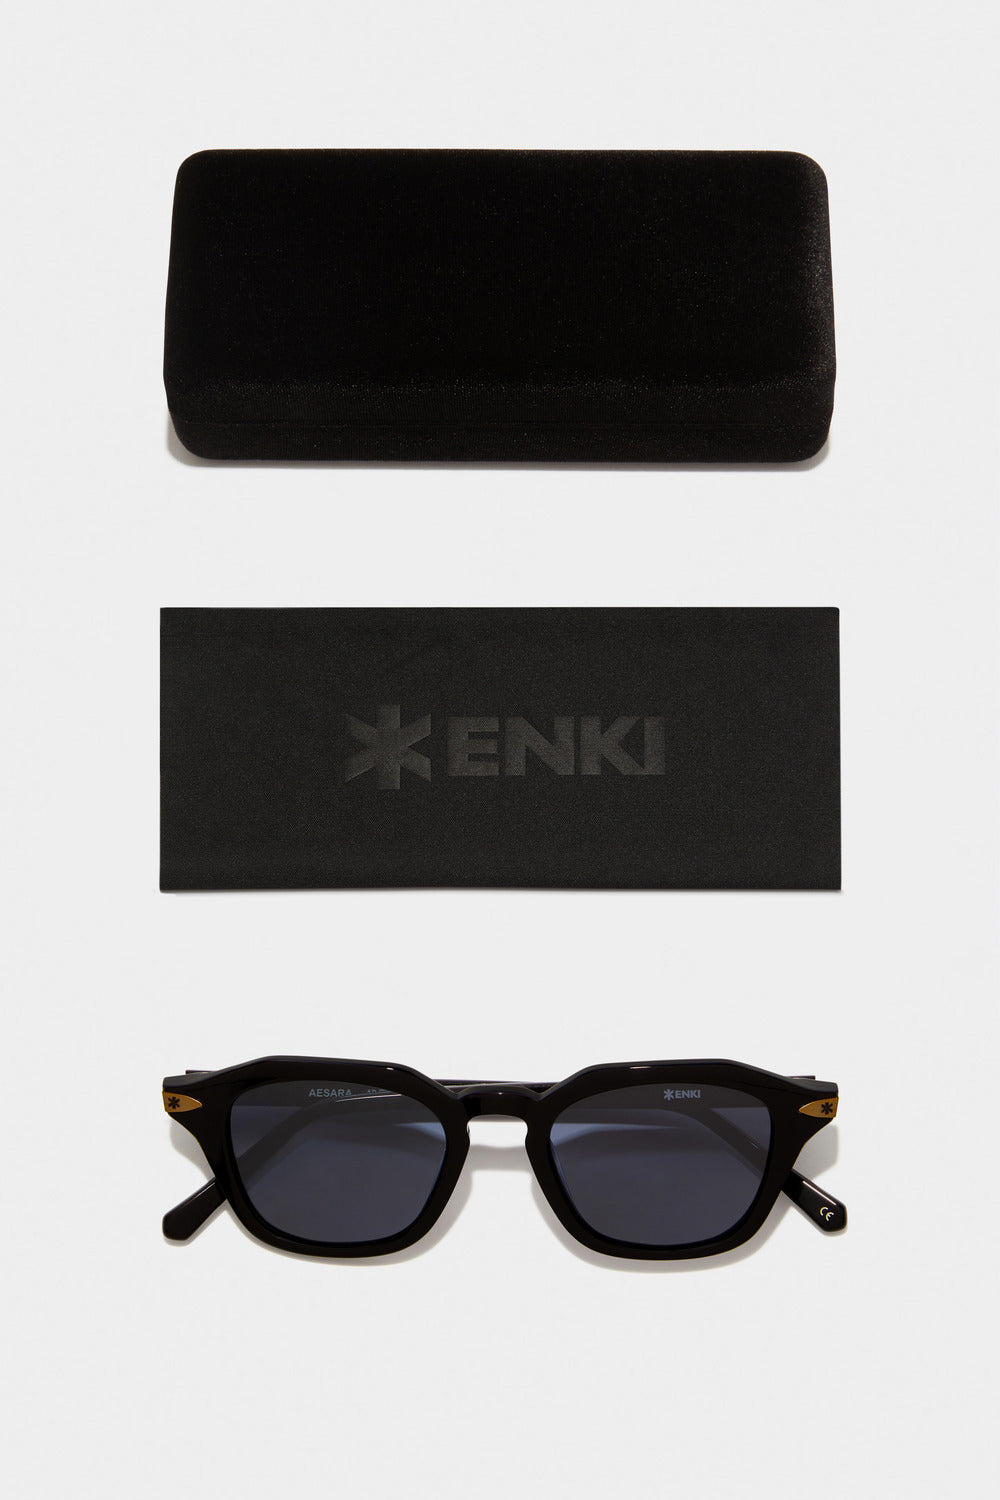 www.enkieyewear.com Aesara Men’s and Women’s Sunglasses